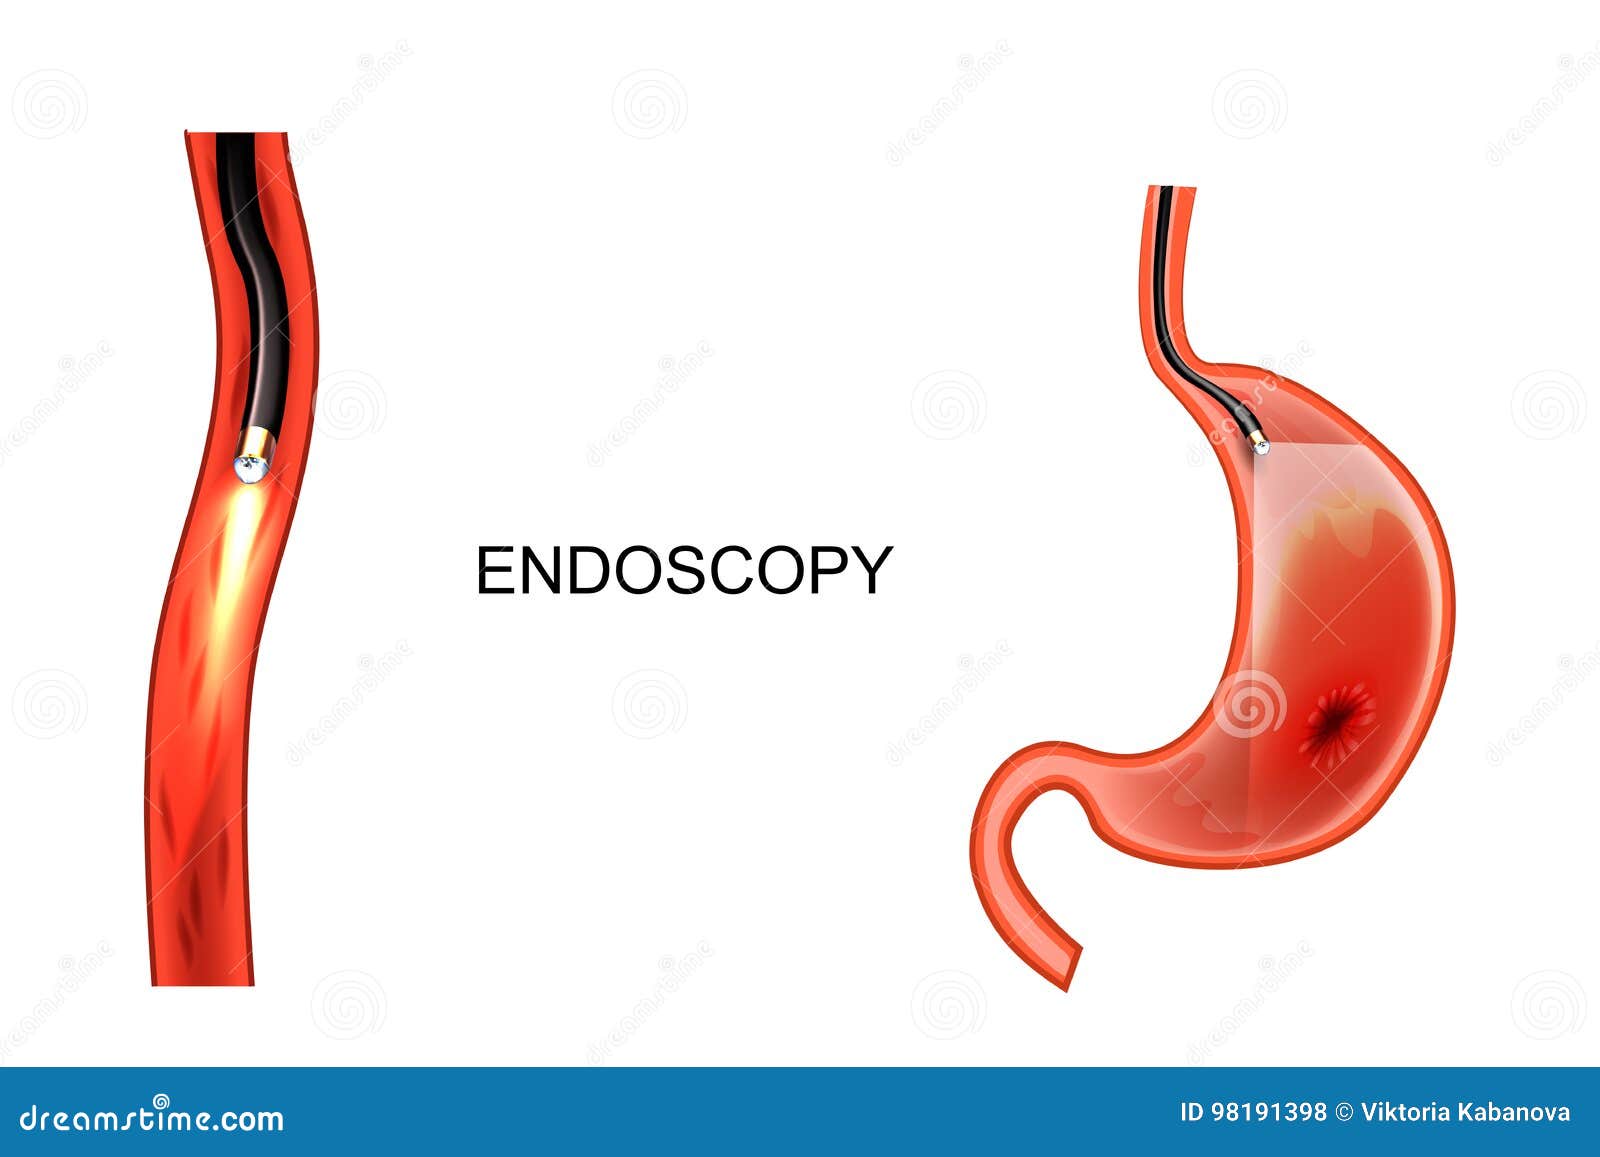 endoscopy of the stomach. egd. ulcer, cancer